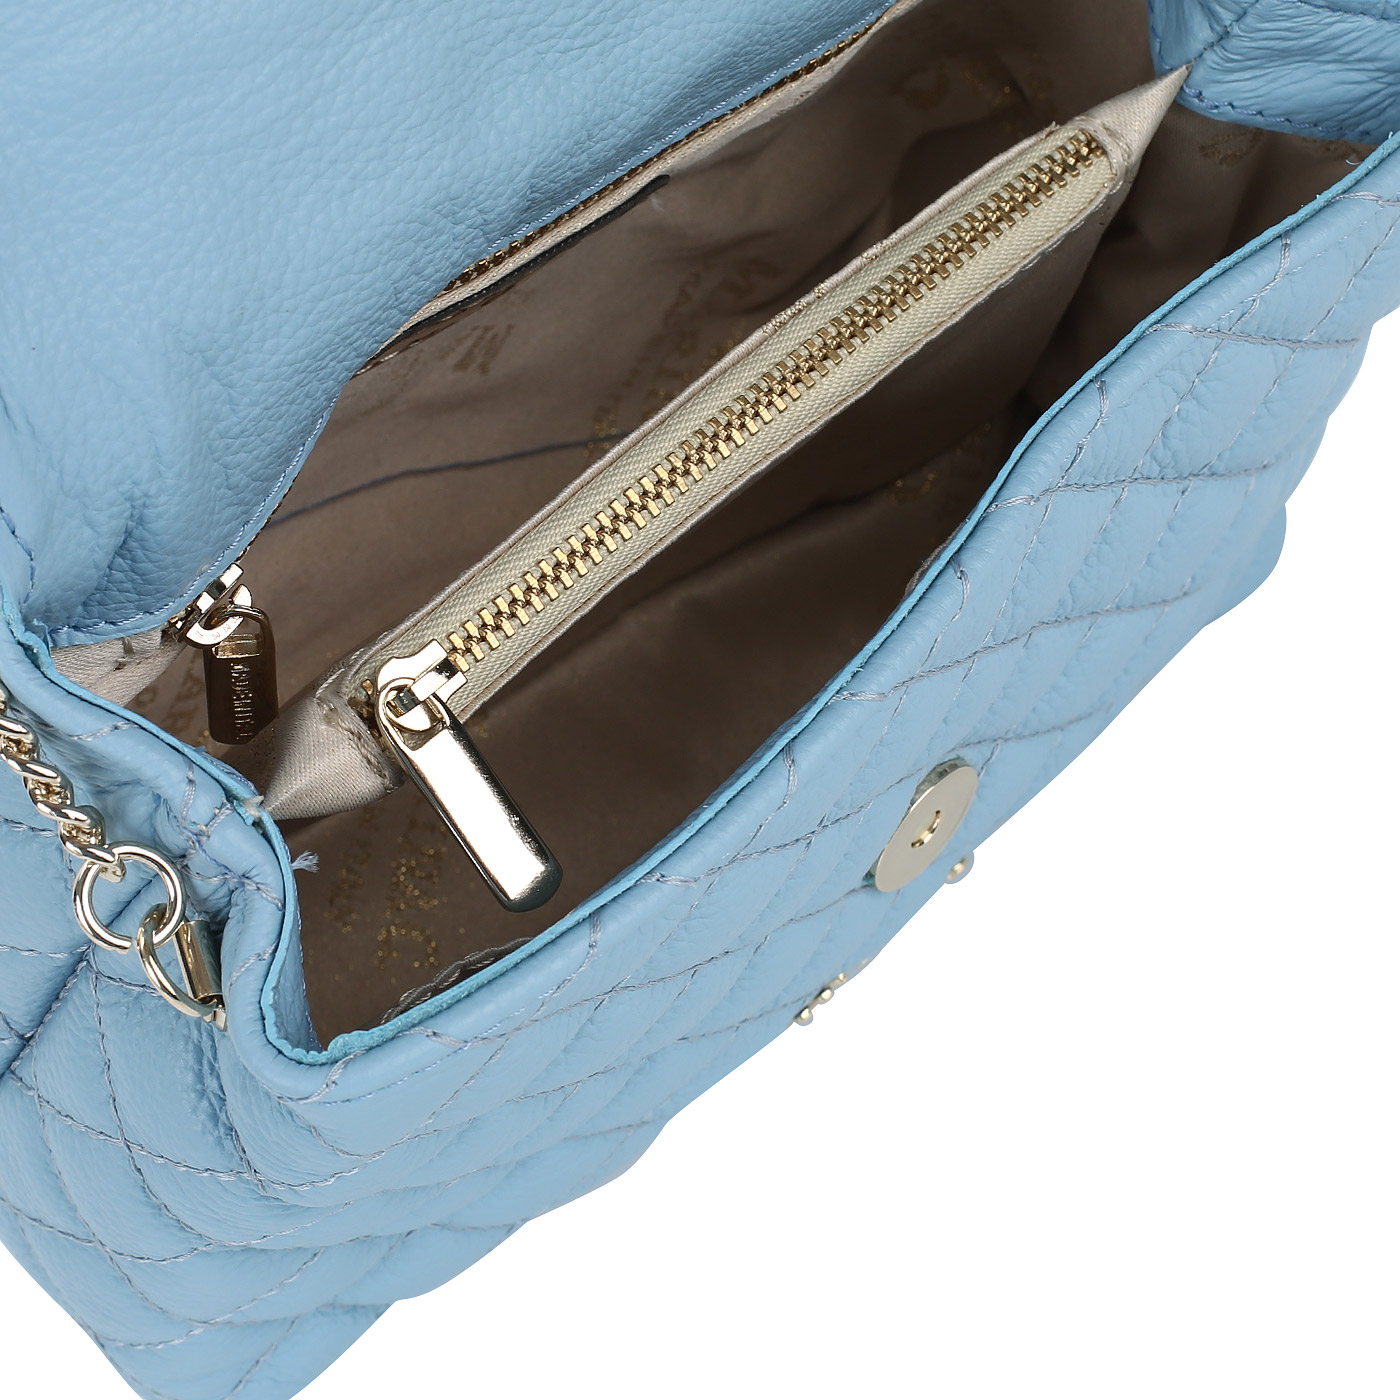 Голубая стеганая сумочка через плечо Marina Creazioni 